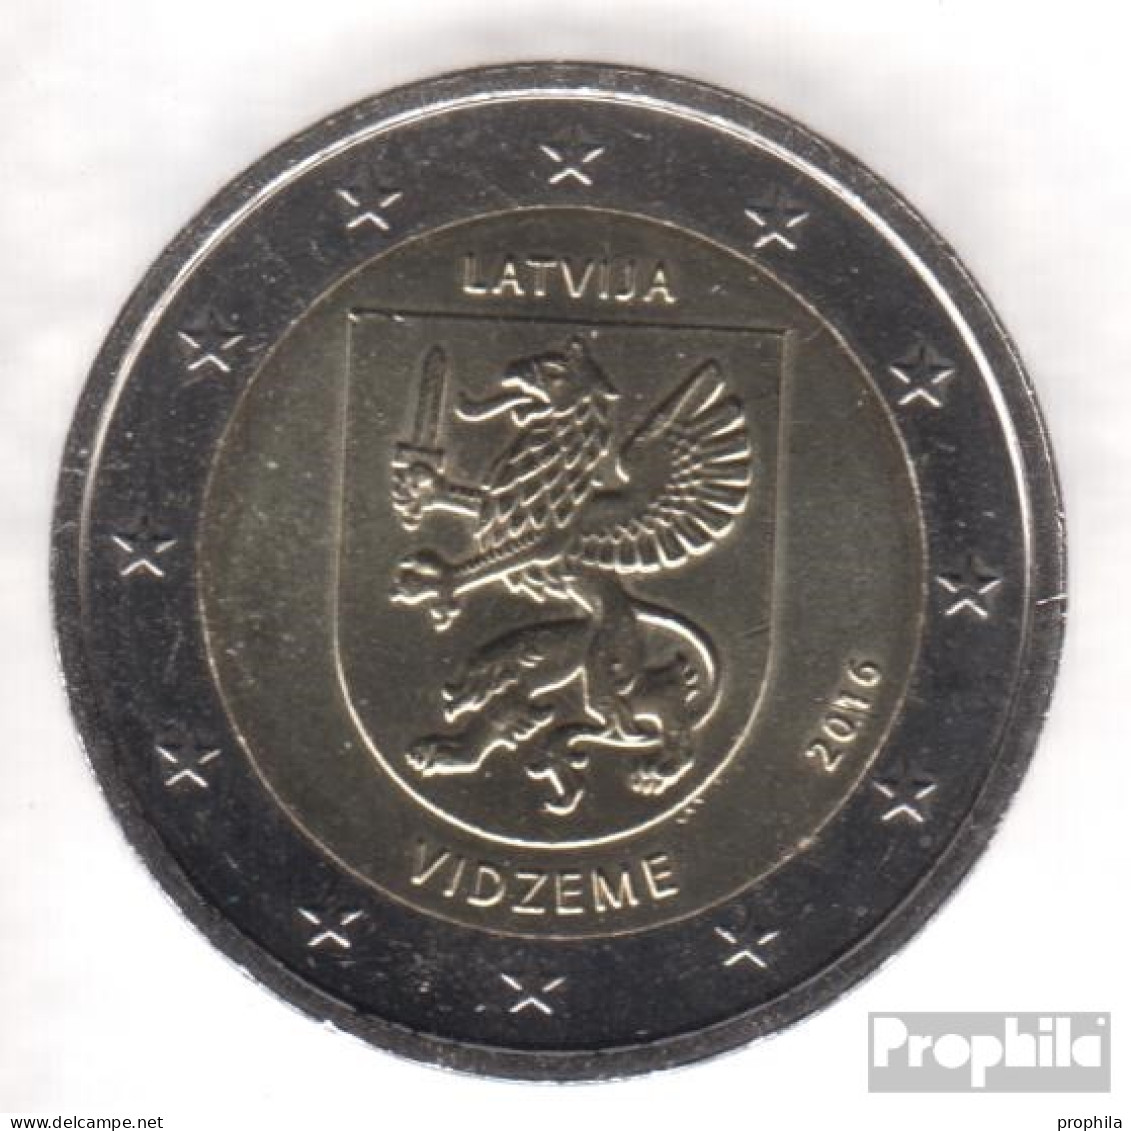 Lettland 2016 Stgl./unzirkuliert Auflage: 1 Mio. Stgl./unzirkuliert 2016 2 Euro Vidzeme - Latvia